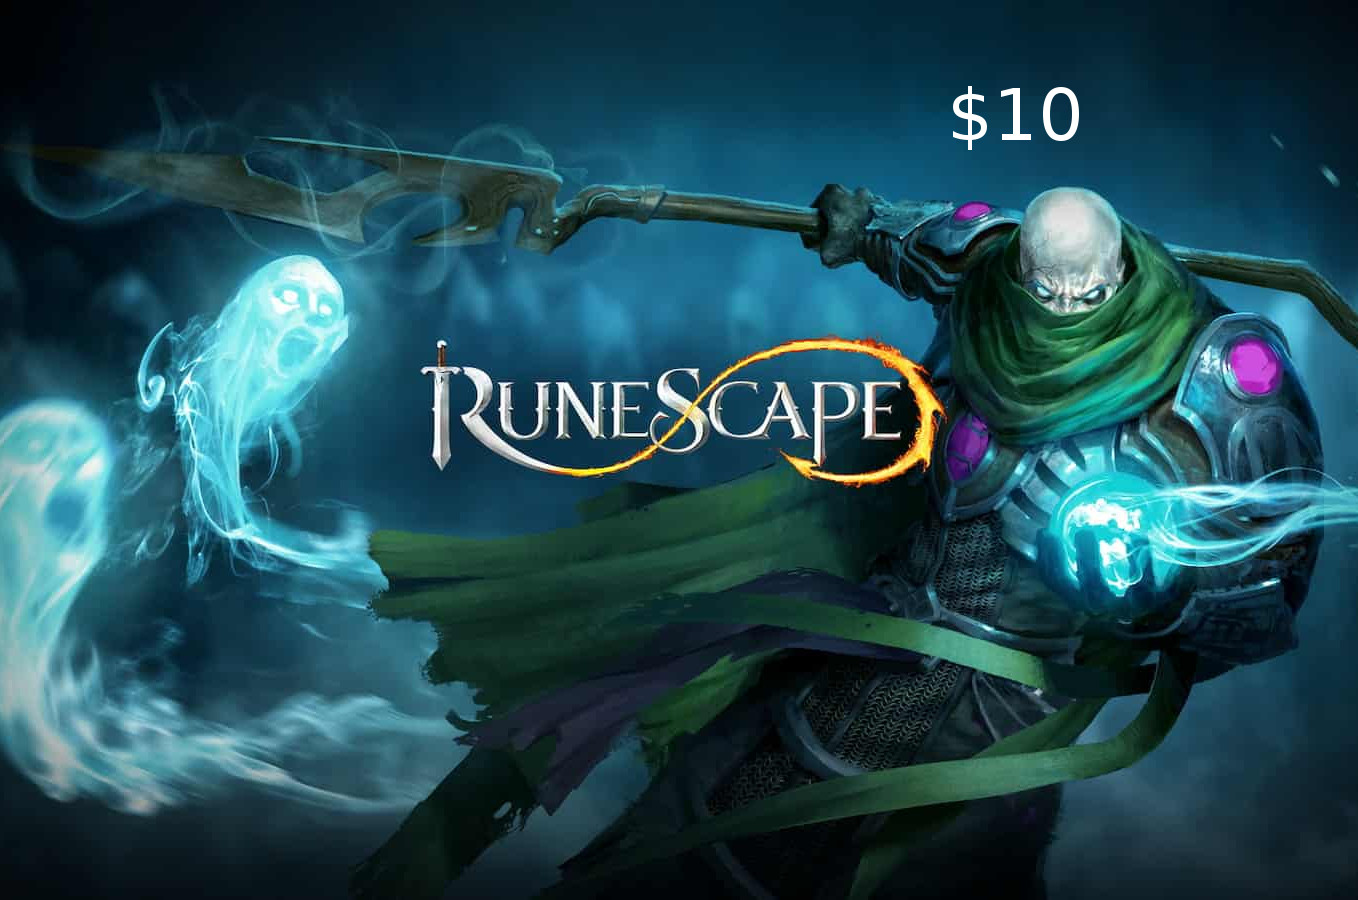 Runescape $10 Prepaid Game Card 10.11 $